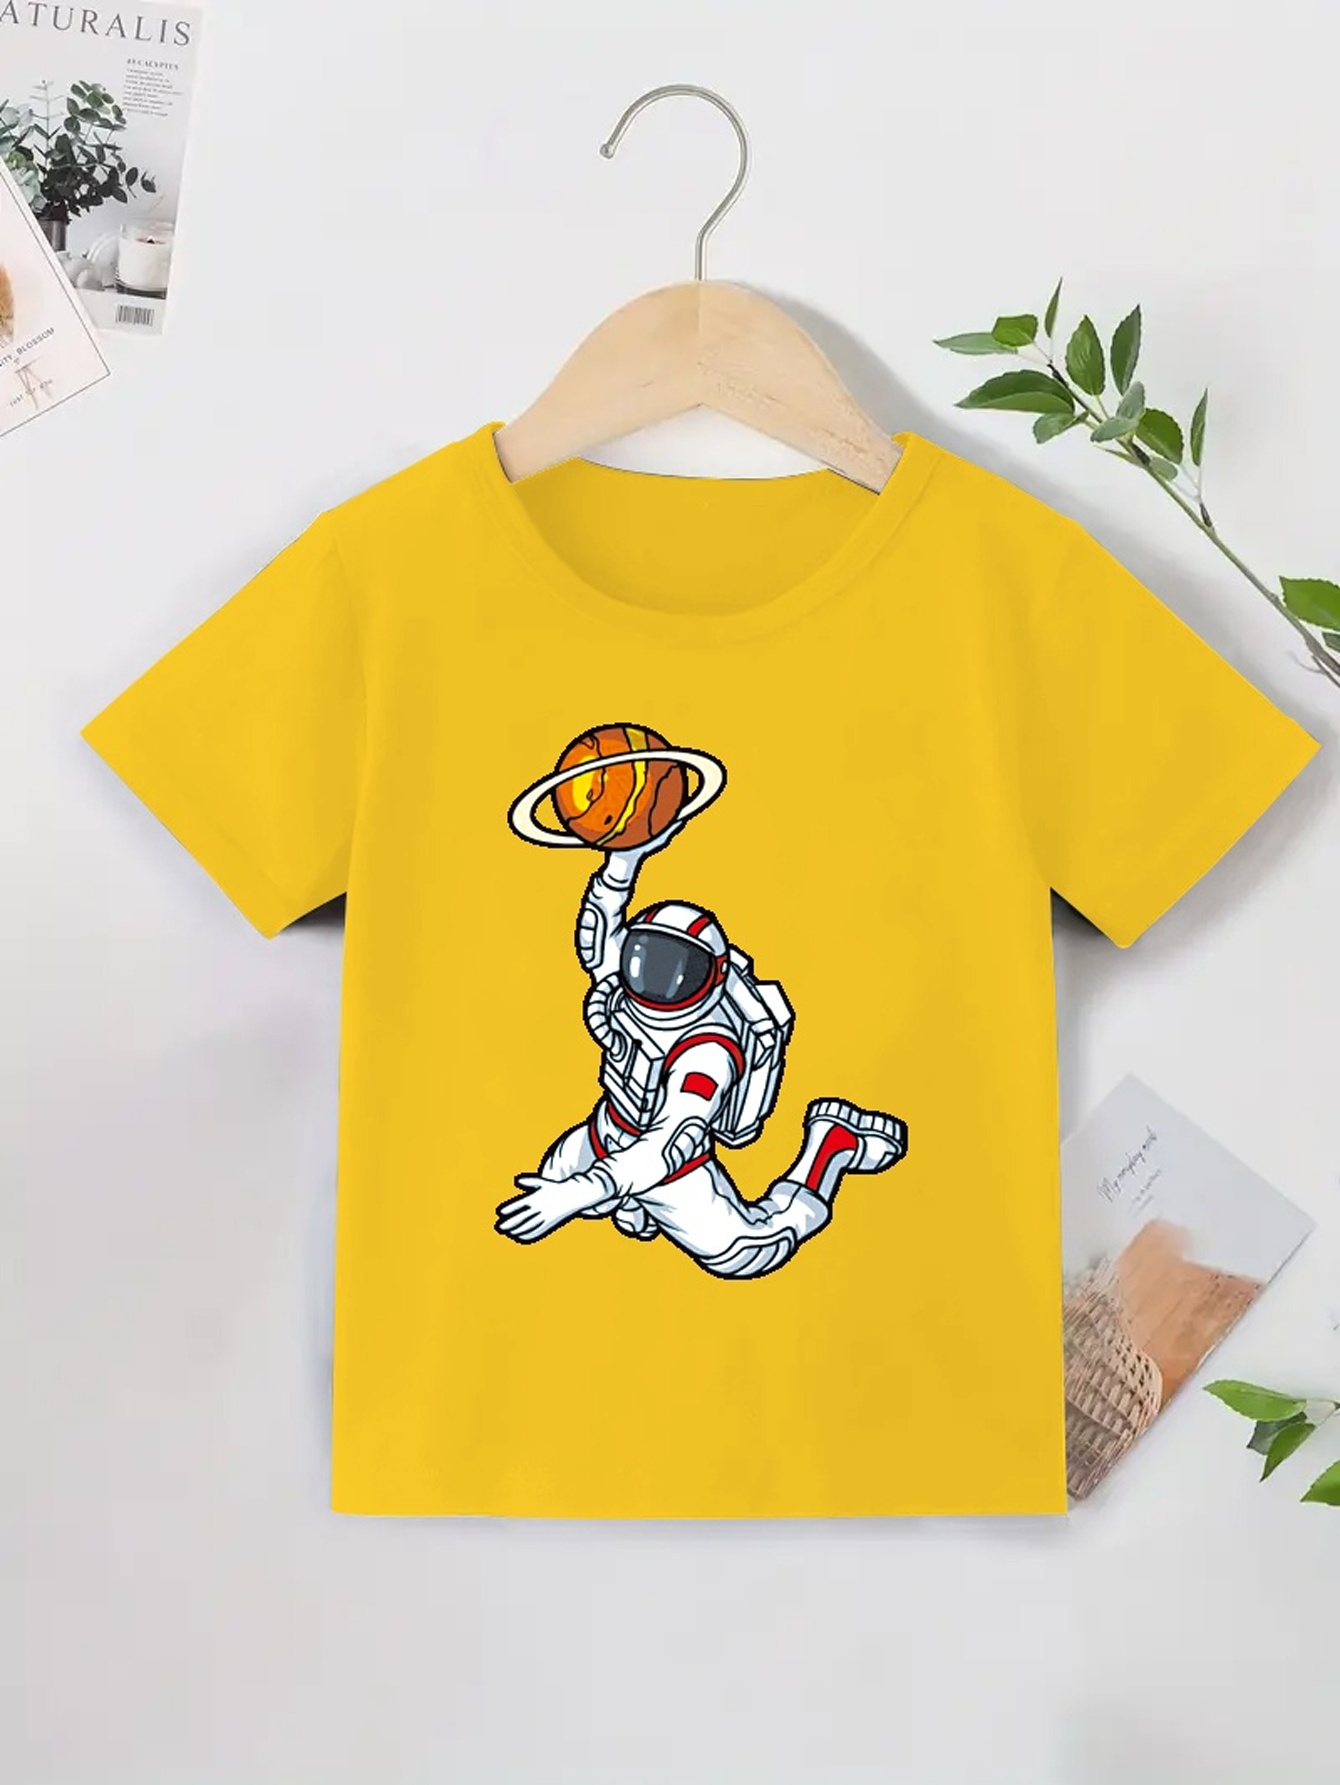 Astronaut Playing Basketball Print Boys Creative T-shirt, Casual